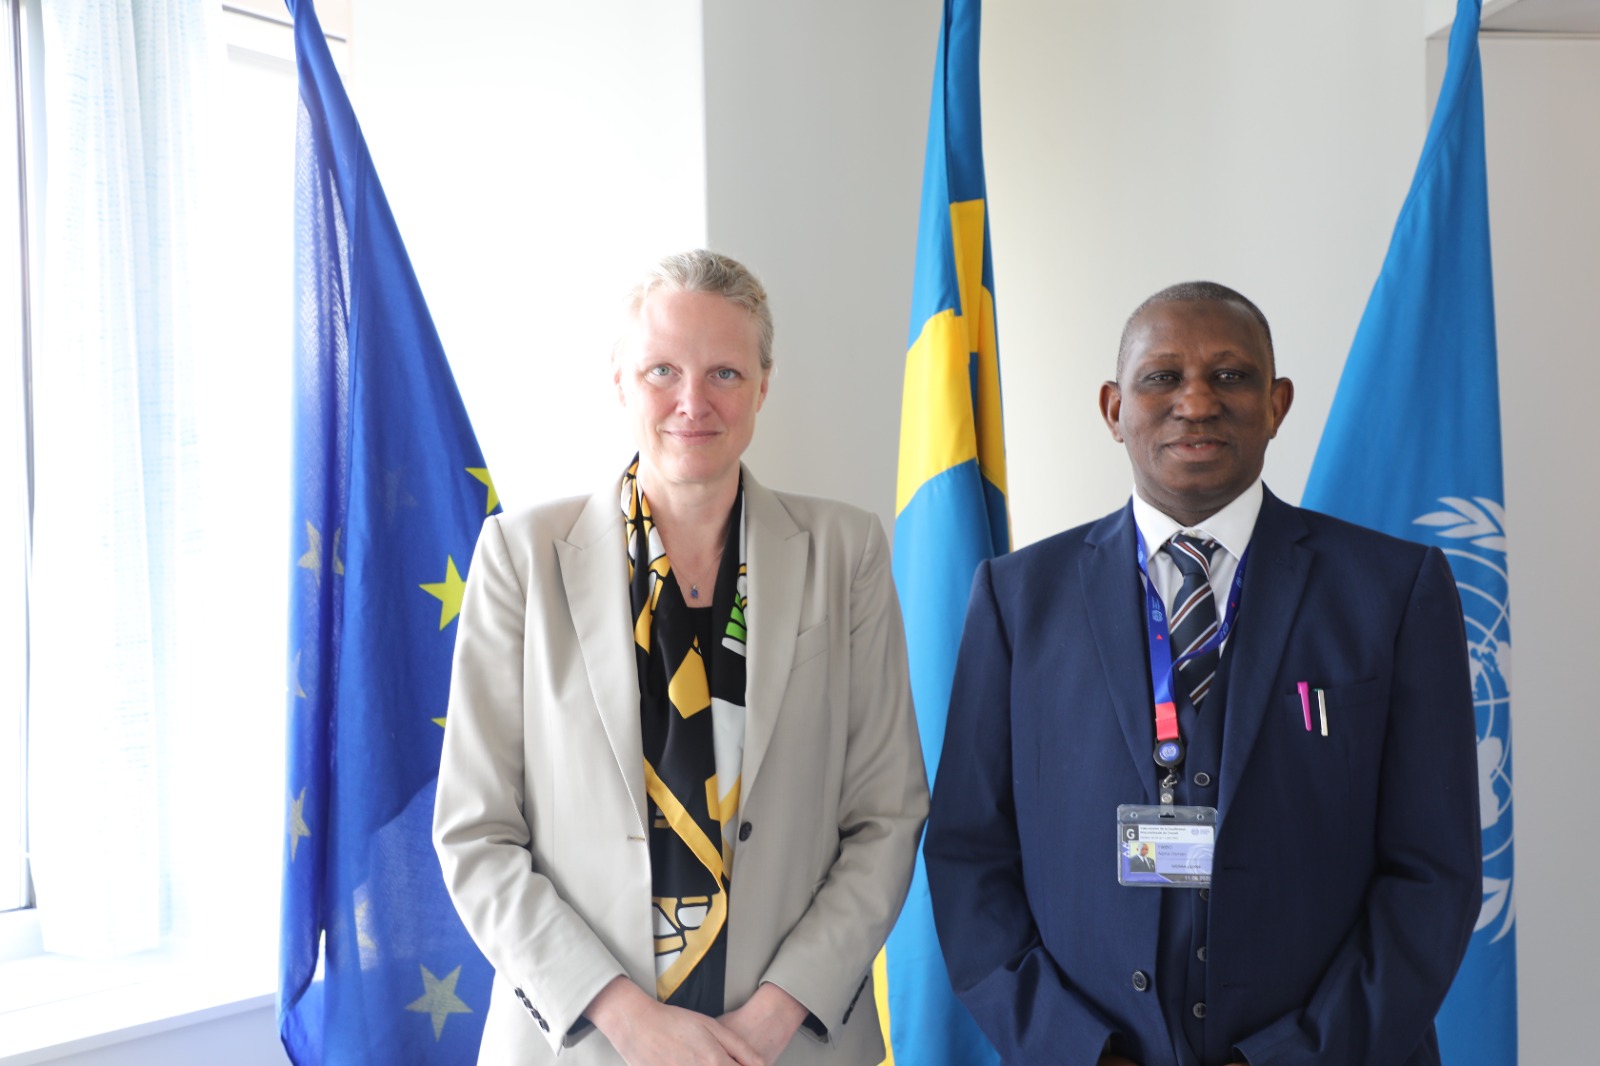 Sierra Leone’s Labour Minister, Alpha Timbo and Swedish Ambassador, Anna Jardfelt, Discuss Support for Sierra Leone